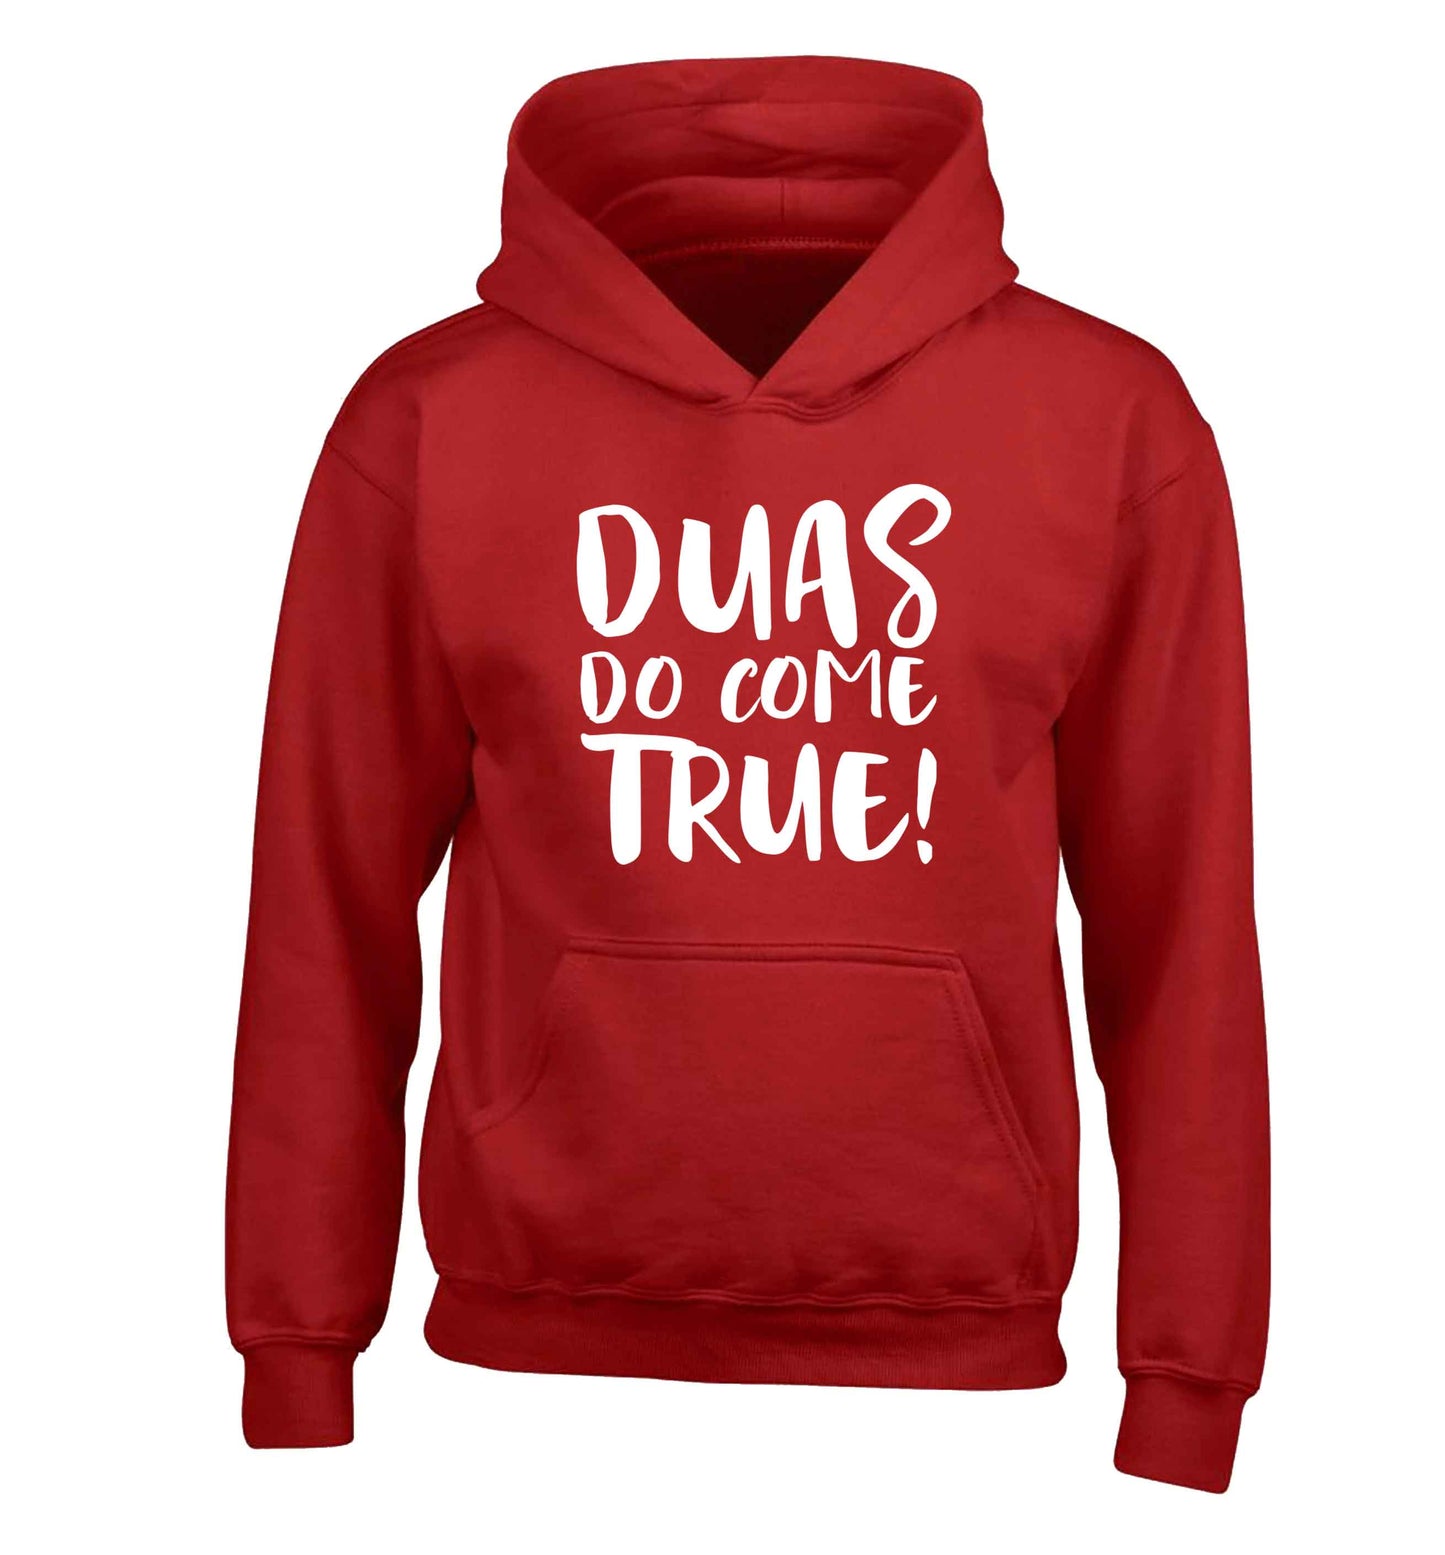 Duas do come true children's red hoodie 12-13 Years